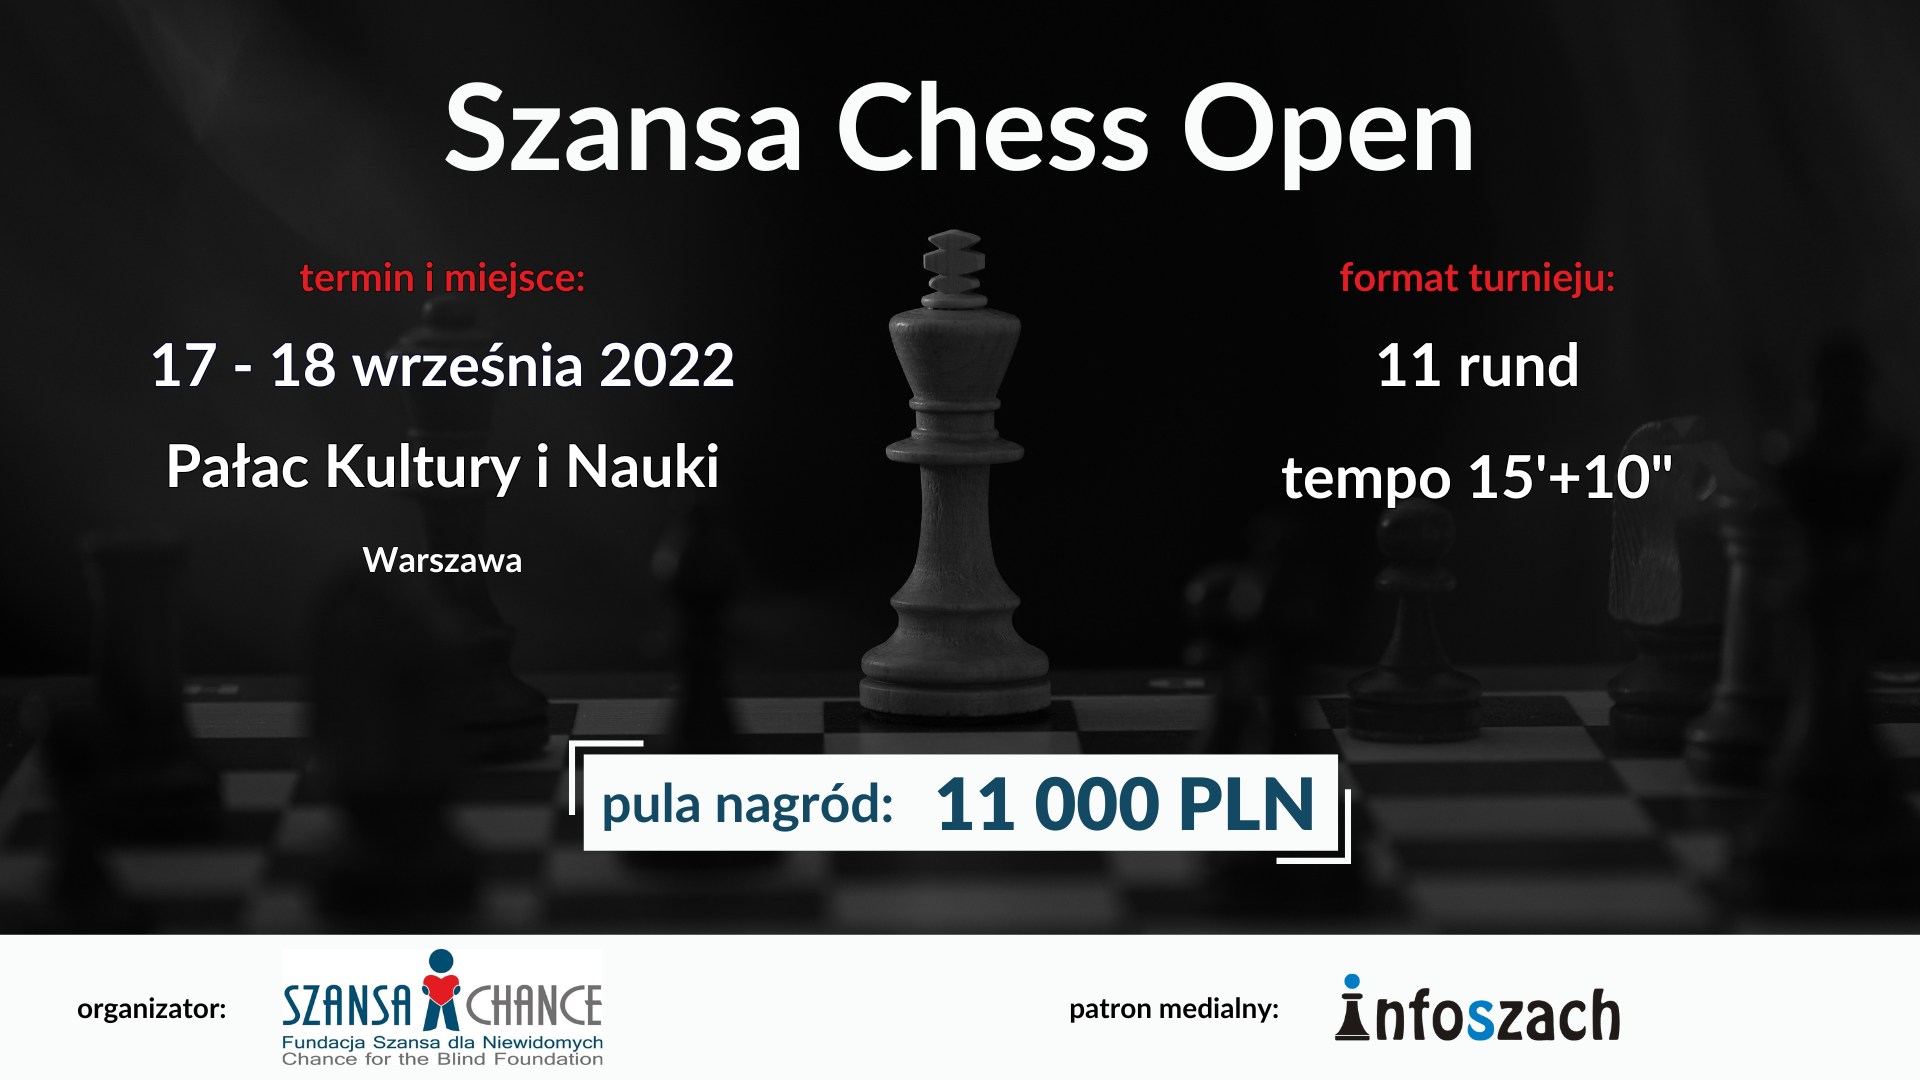 juz-za-miesiac-szansa-chess-open!